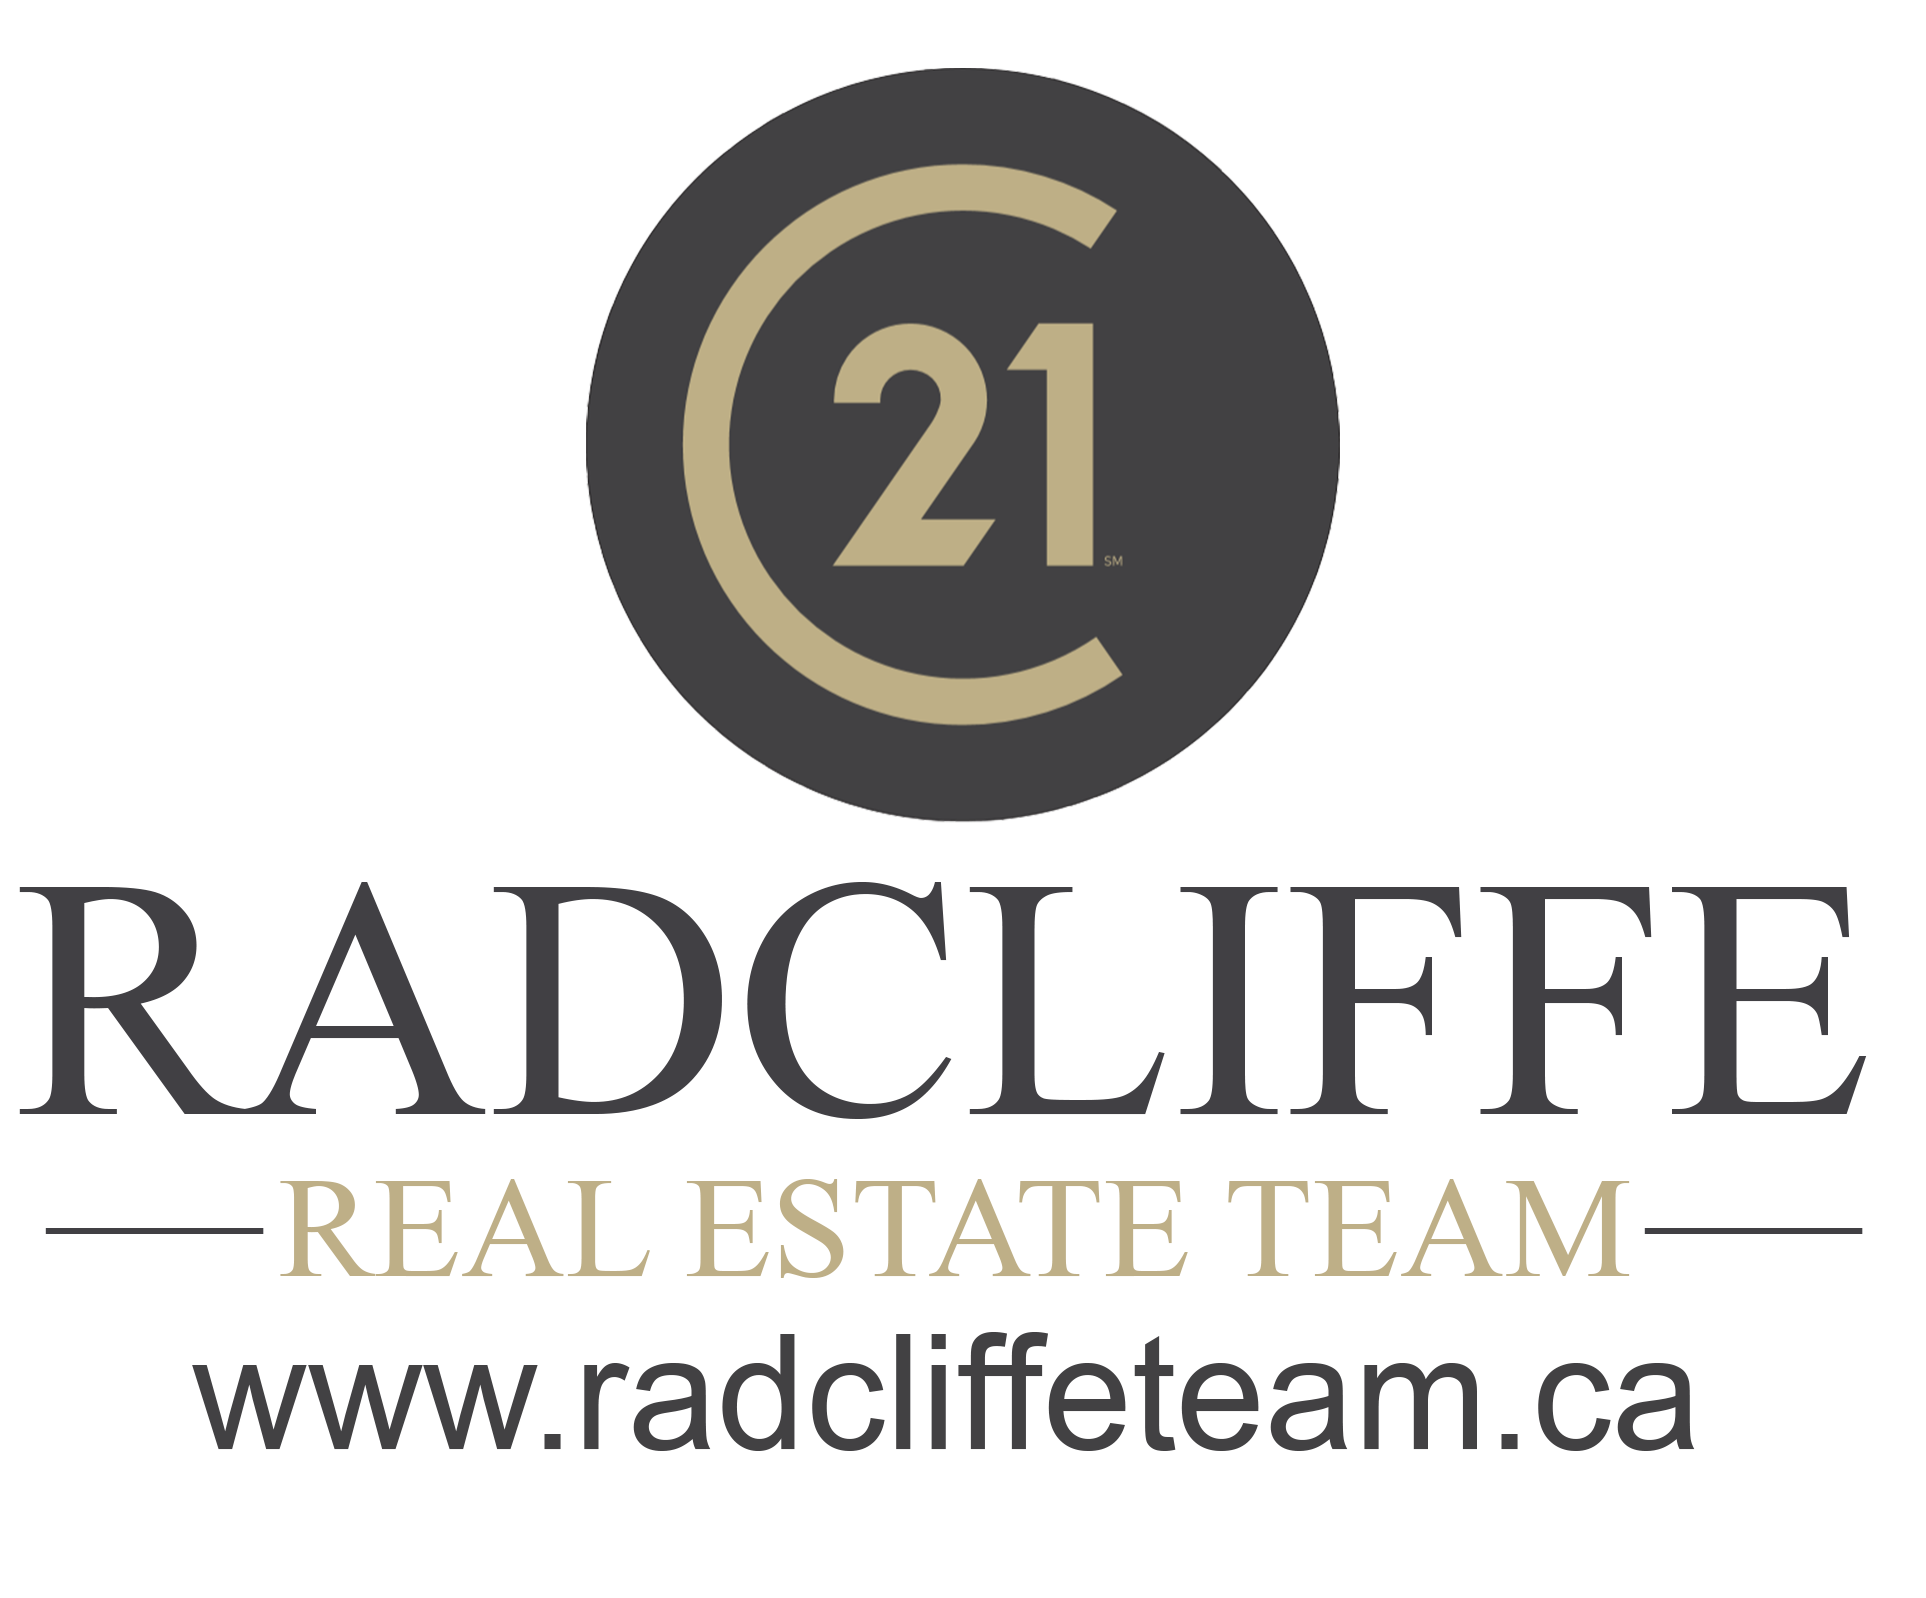 Century 21 Radcliffe Real Estate Team